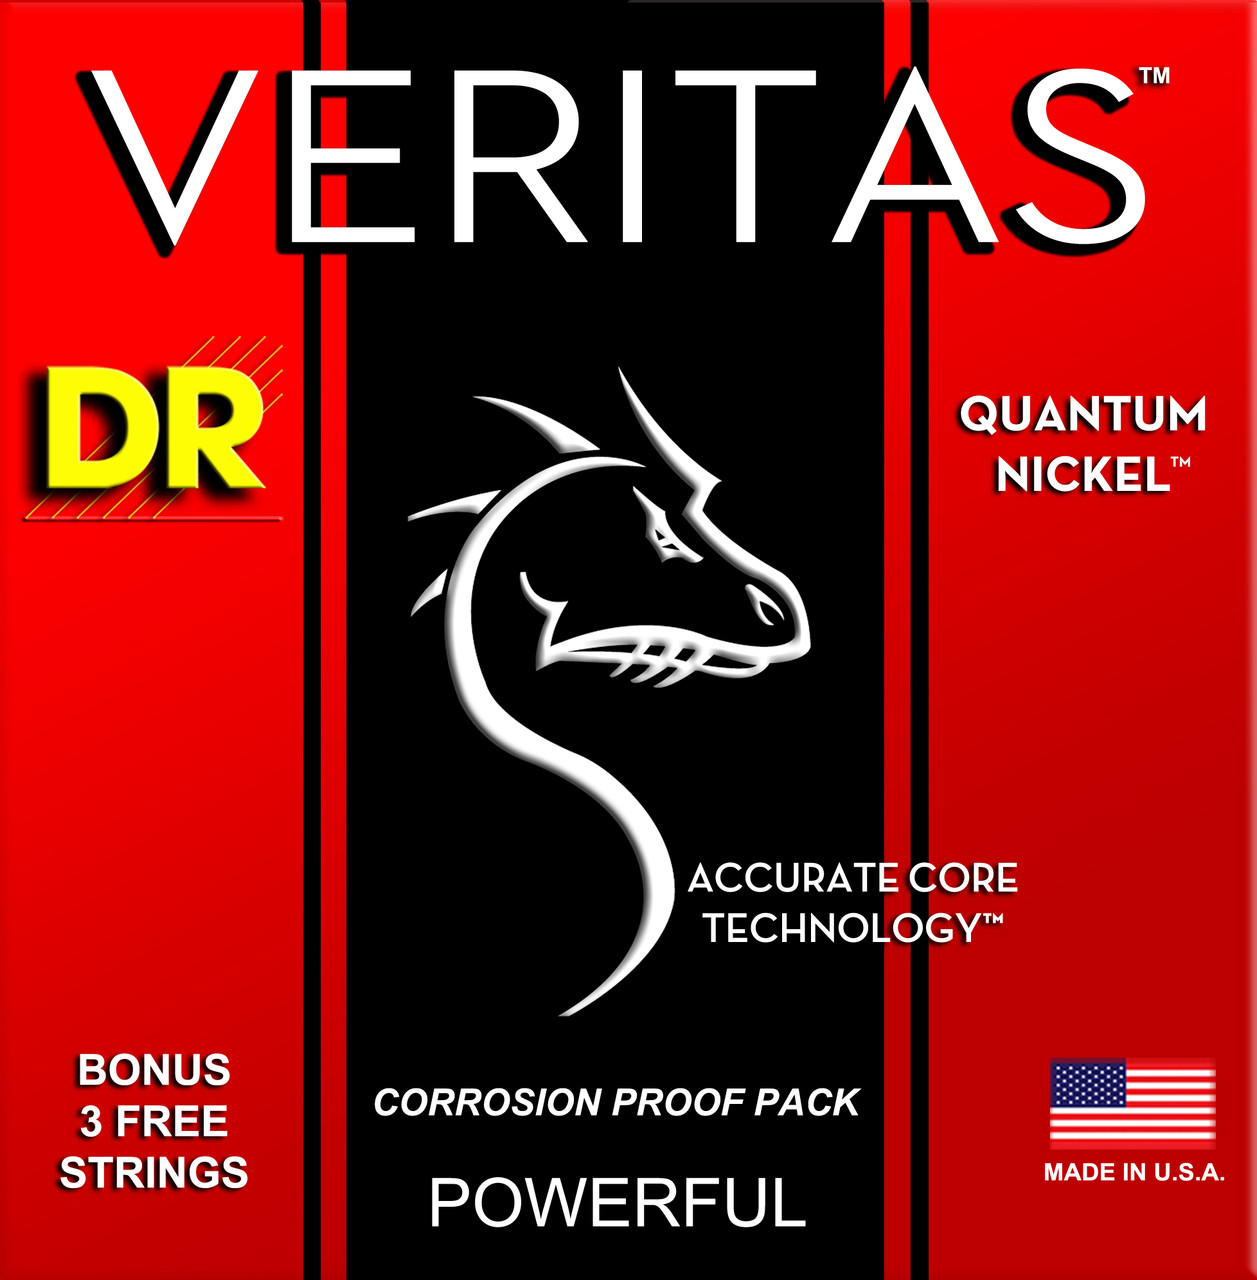 DR Veritas Electric Quantum Nickel 9-42 Corrosion Proof Pack VTE-9 9 11 16 24 32 42 W/Bonus of 3 Free Strings